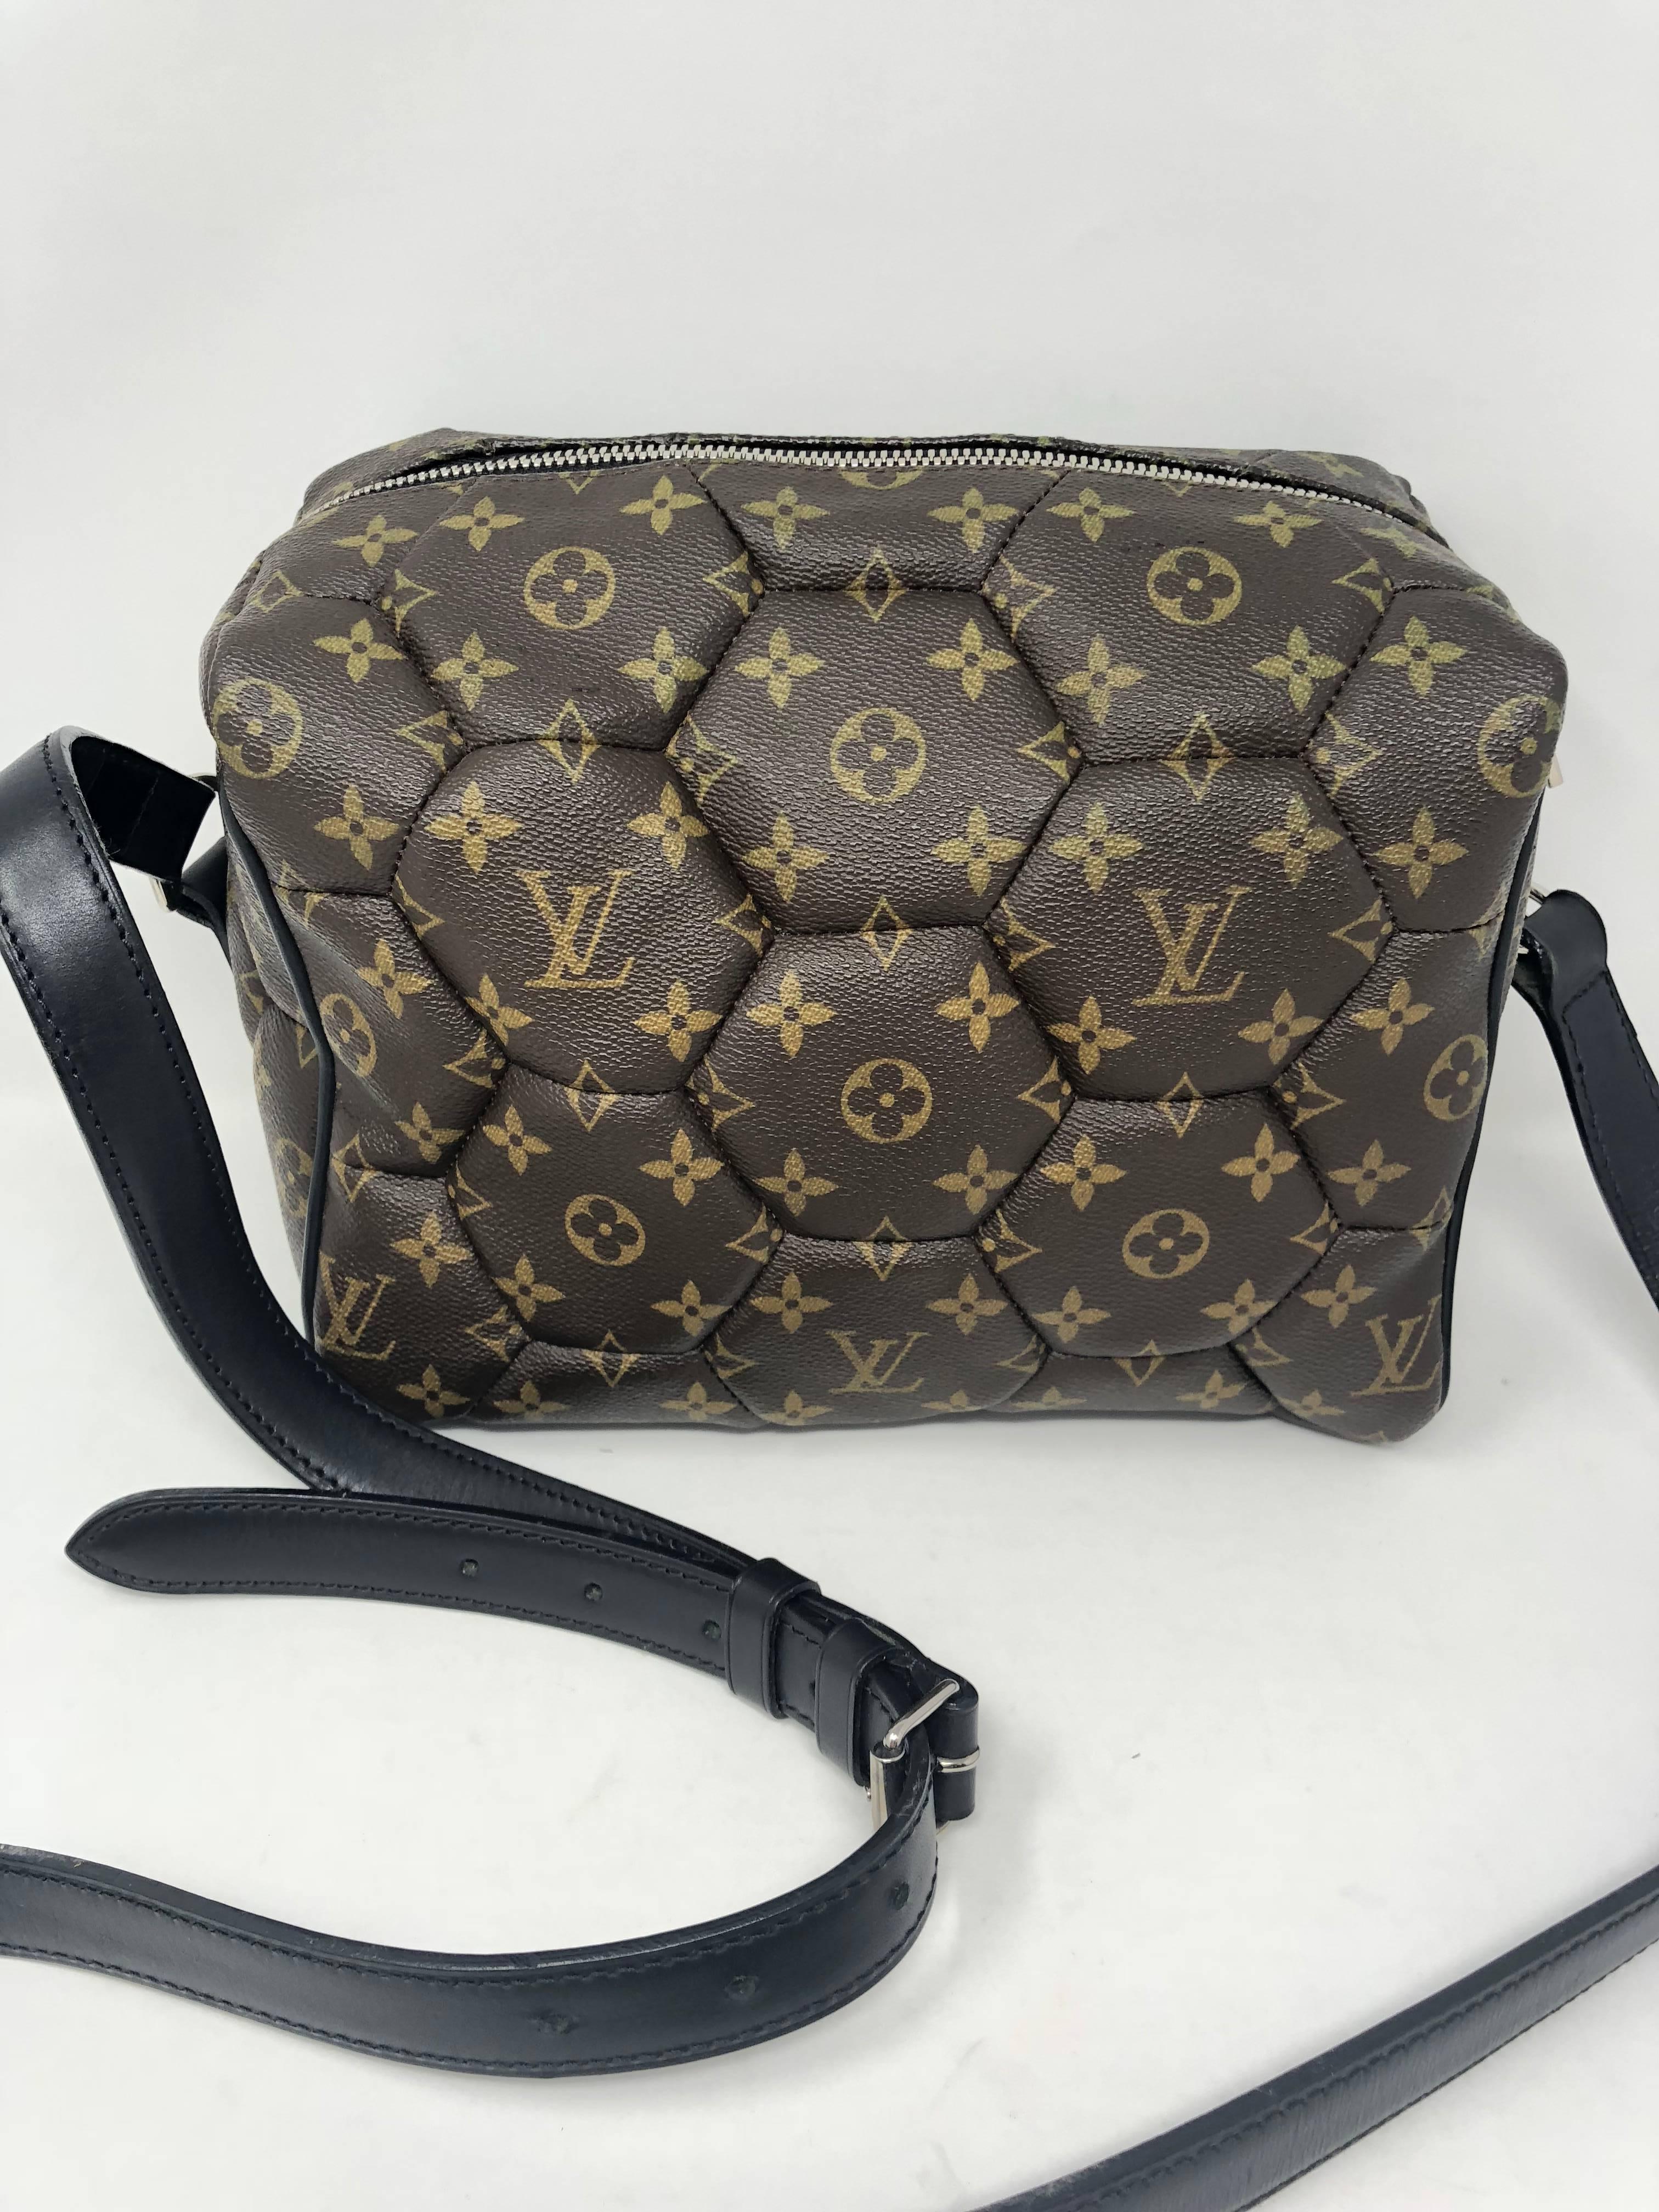 The Louis Vuitton Soccer Ball Weekend Bag…Really?